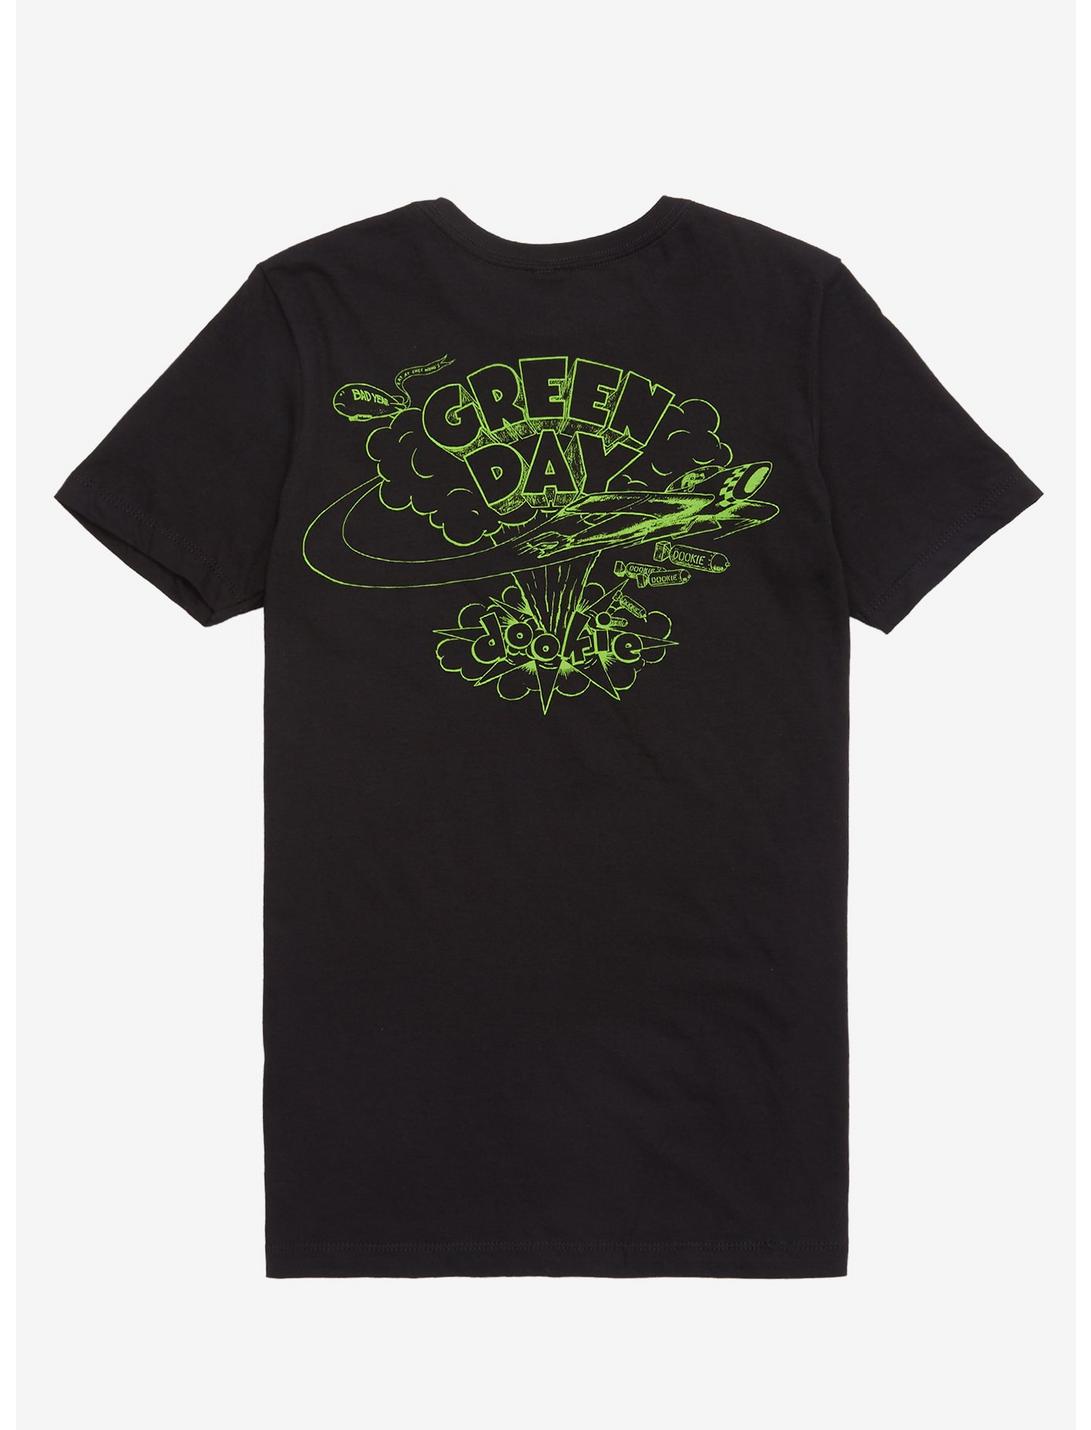 Green Day Dookie Line Art Girls T-Shirt, BLACK, hi-res